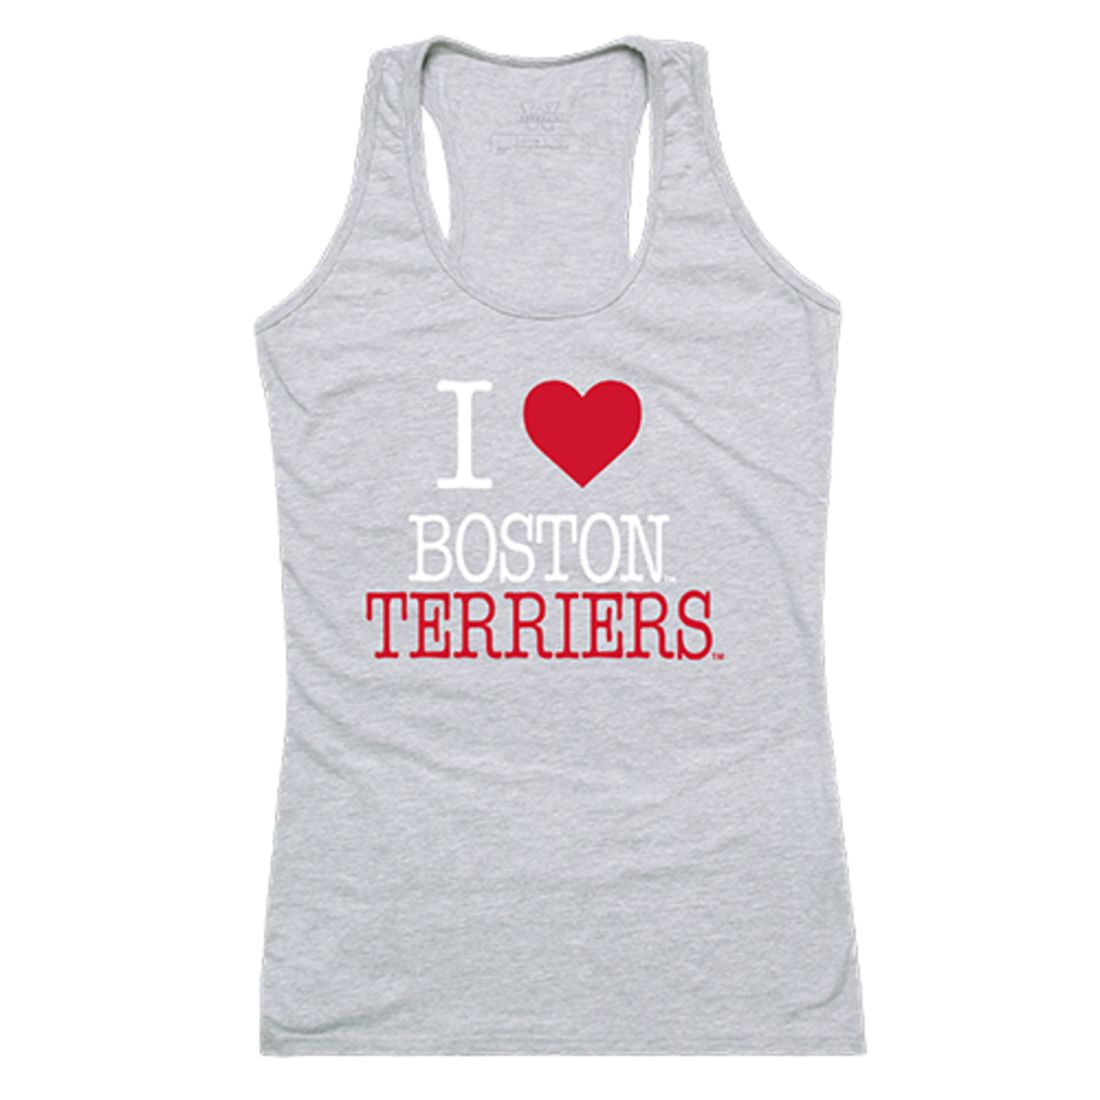 Boston University Terriers Womens Love Tank Top Tee T-Shirt Heather Grey-Campus-Wardrobe